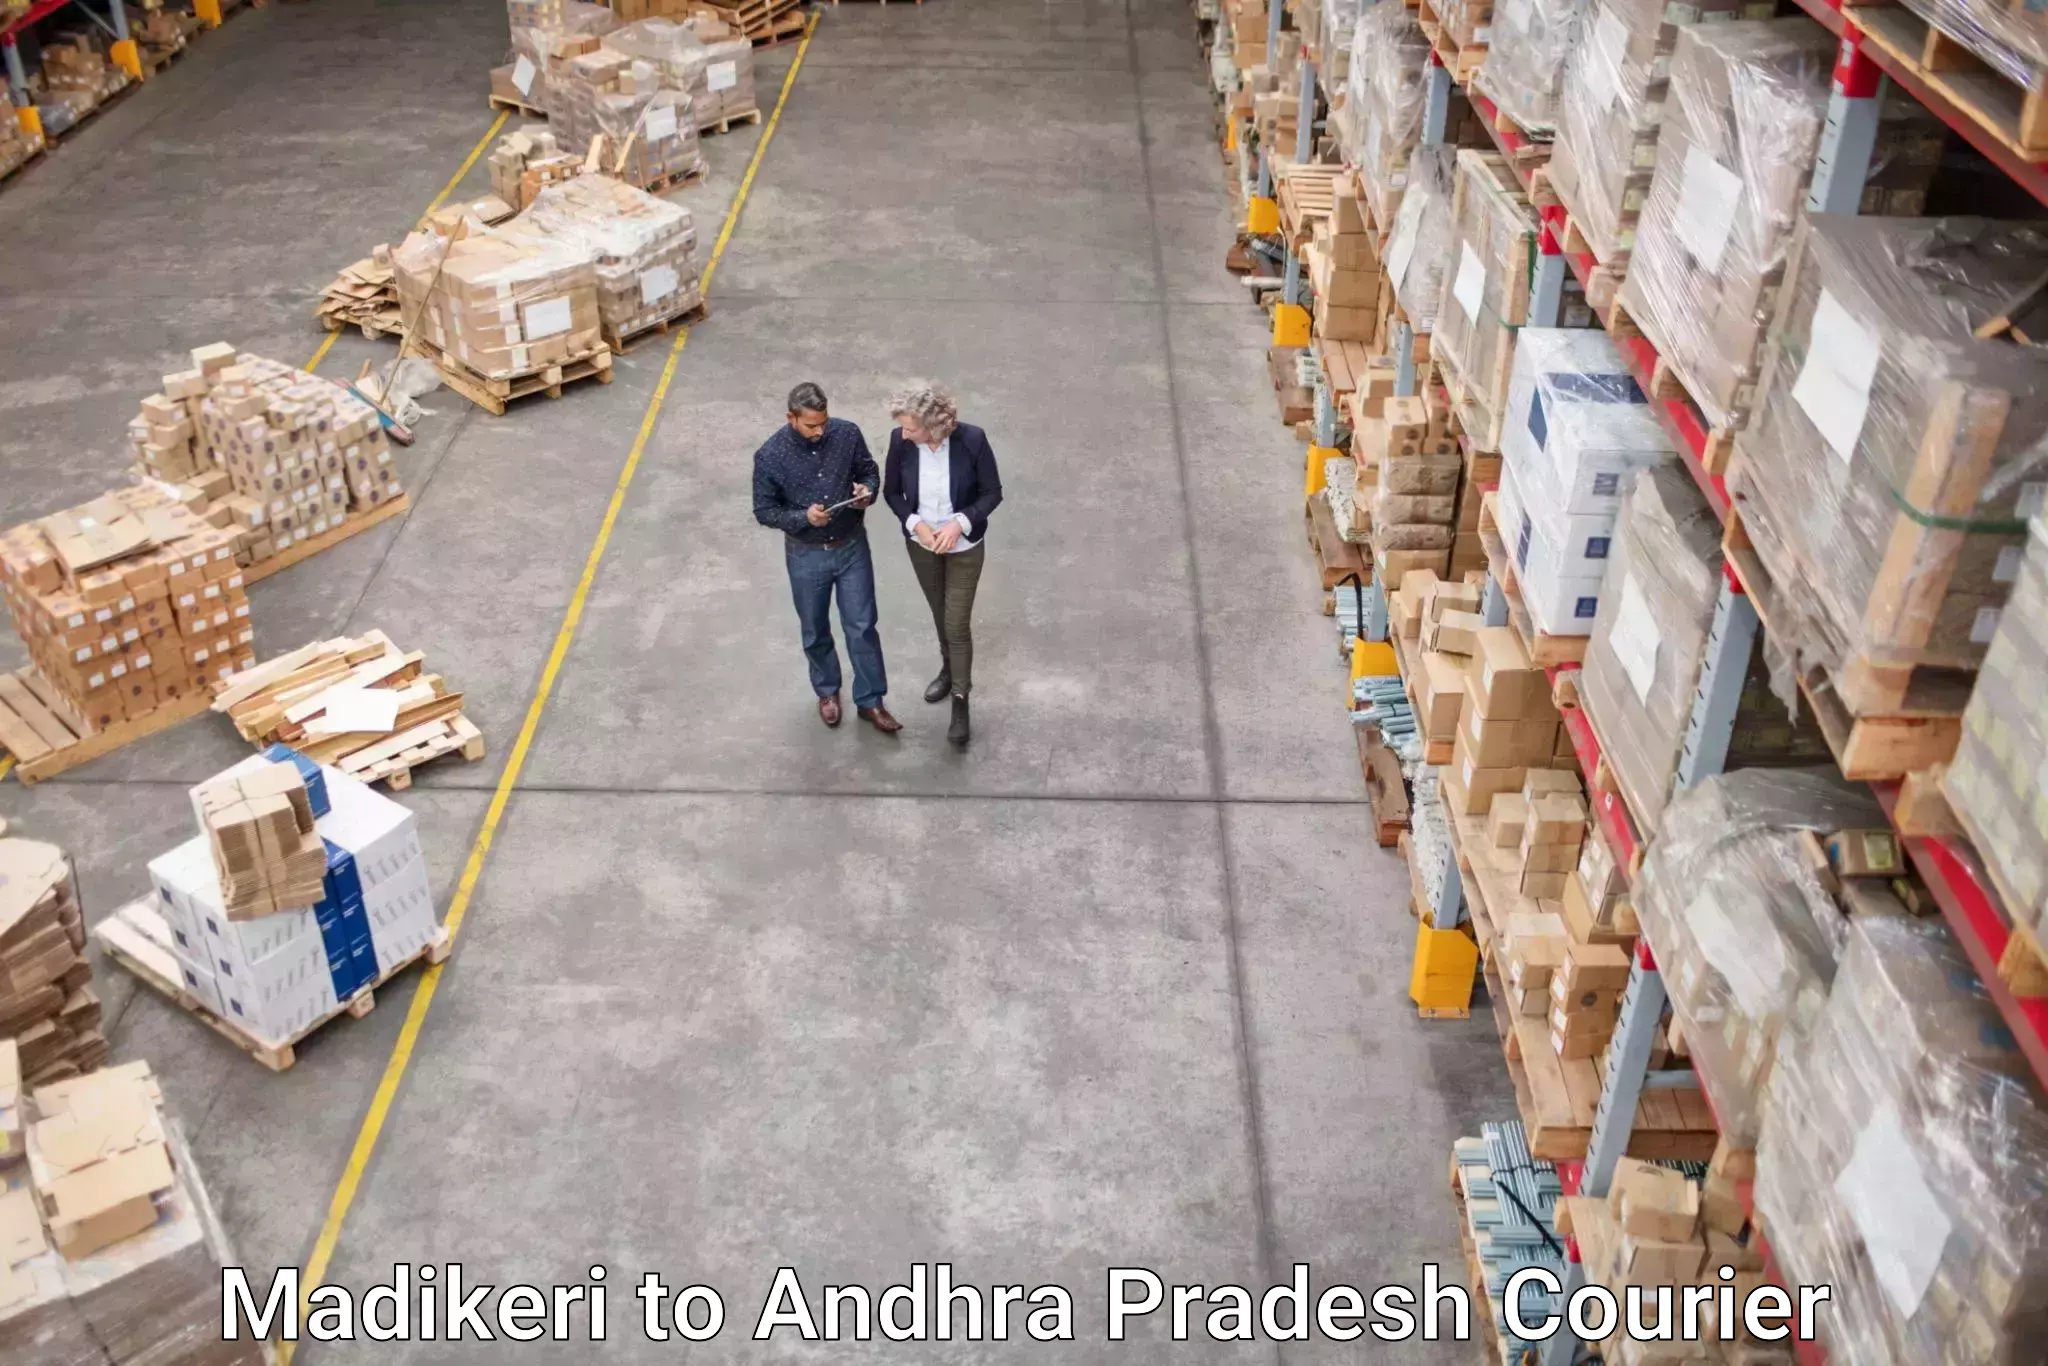 Package delivery network Madikeri to Udayagiri